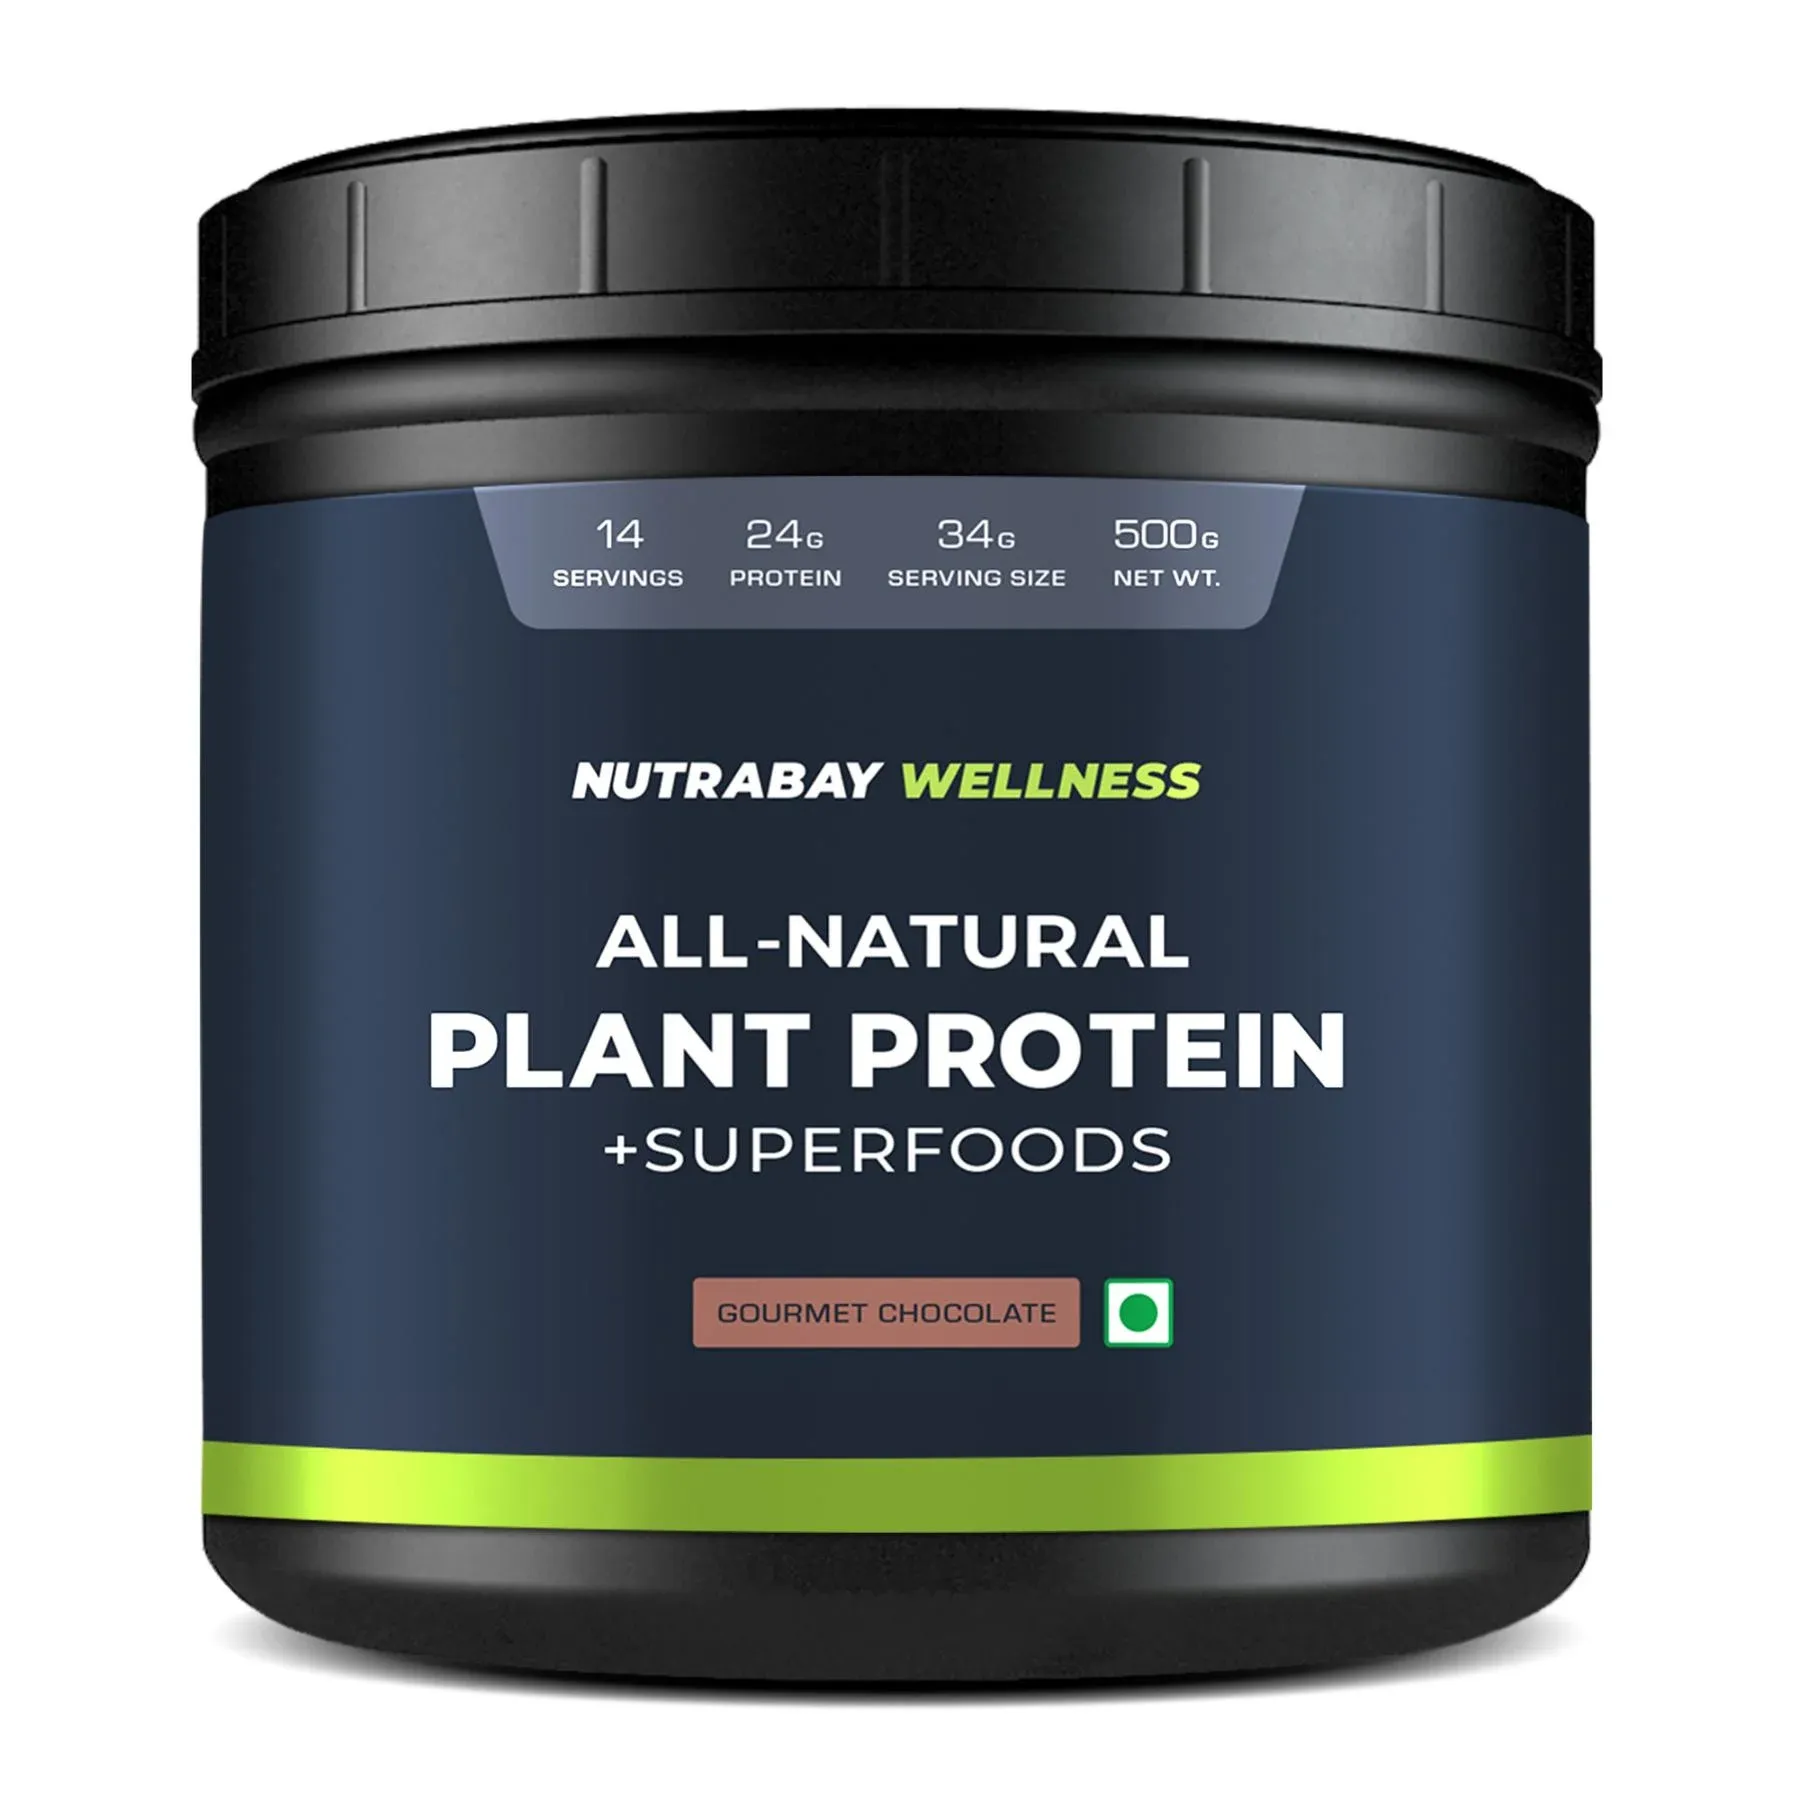 Nutrabay Wellness Vegan Plant Protein Powder Superfoods Image